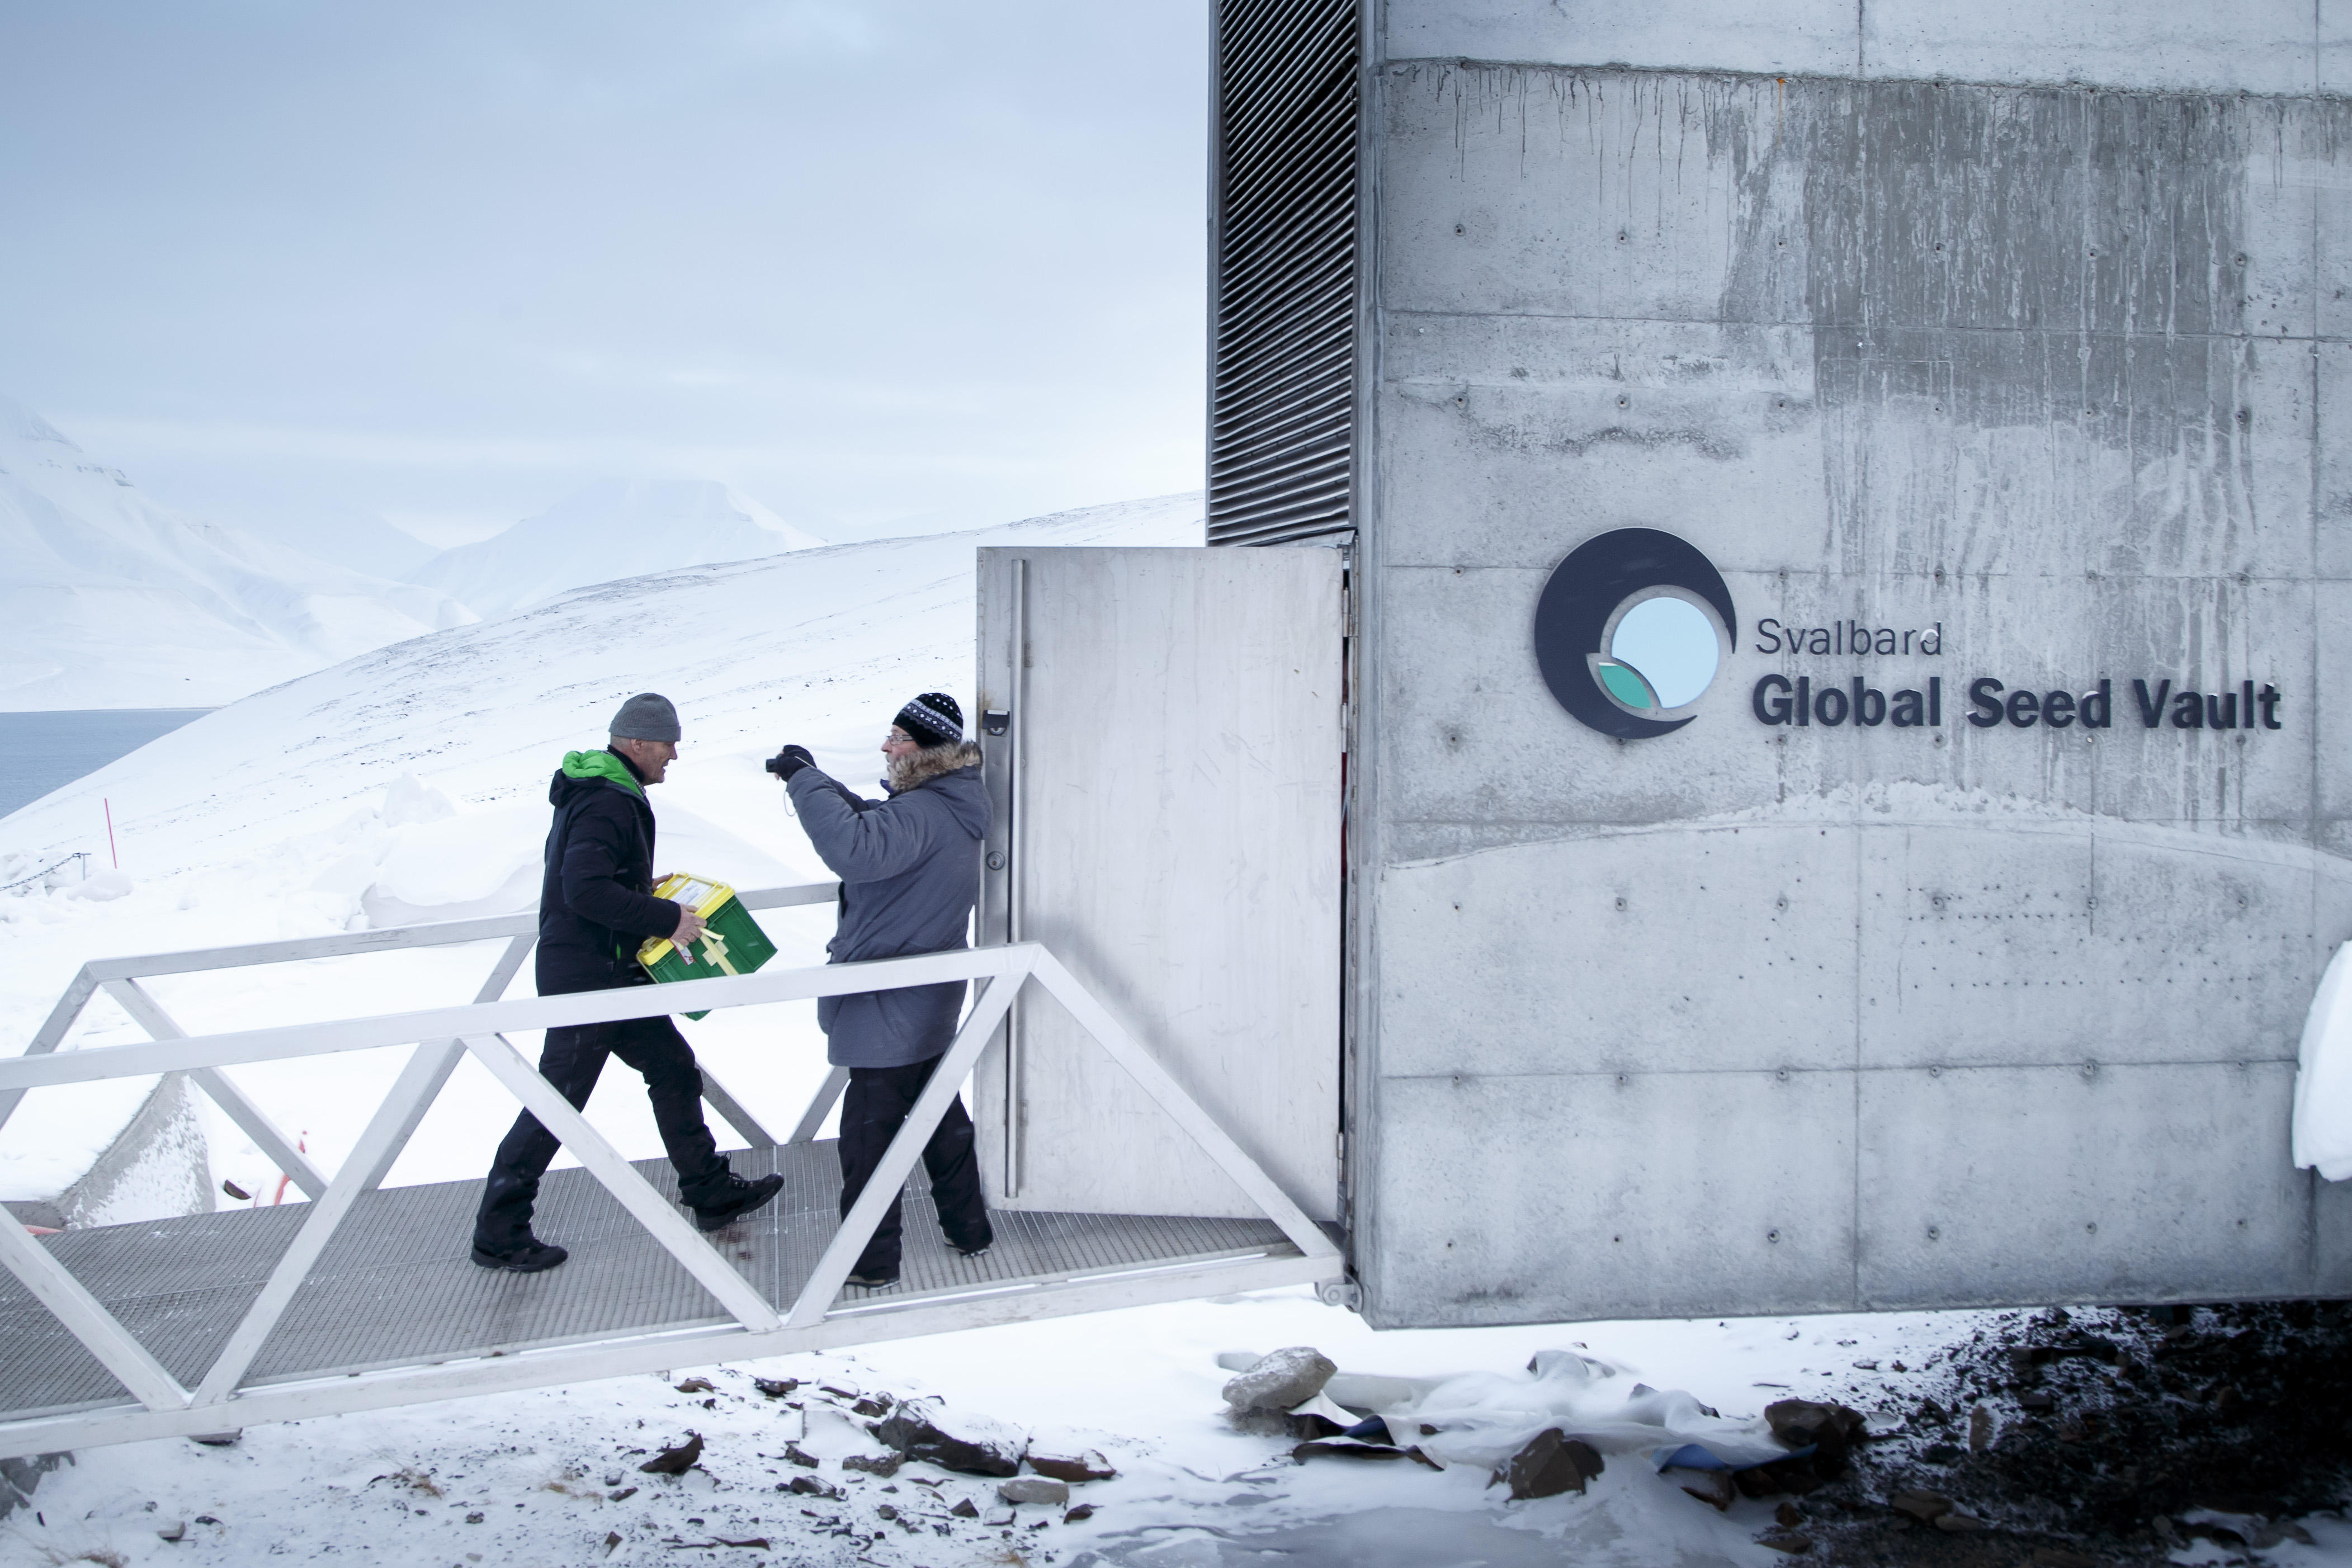 Arctic "doomsday" seed vault receives 50,000 new deposits - CBS News